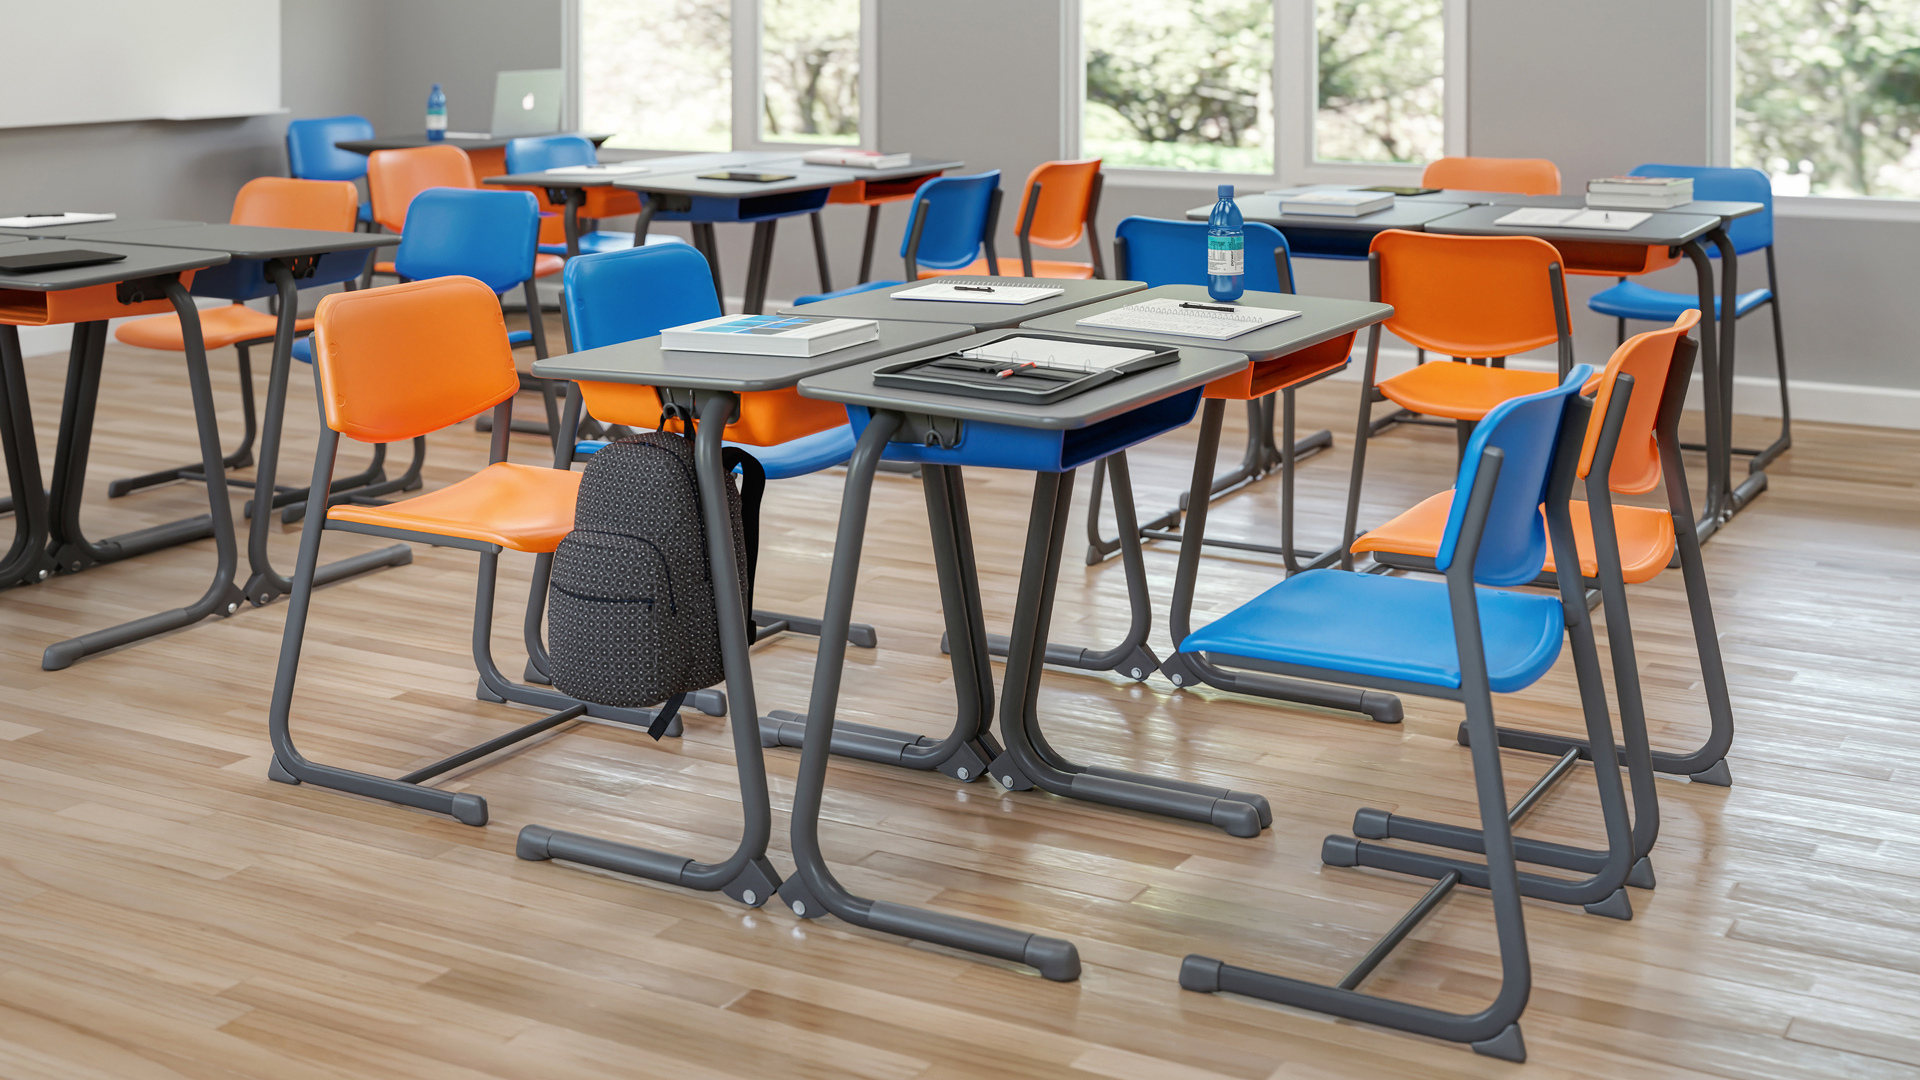 Produtos na imagem: Mesas individuais 7018R, cadeira 4321, mesa de professor 70322 e lousas modulares Wallvision.